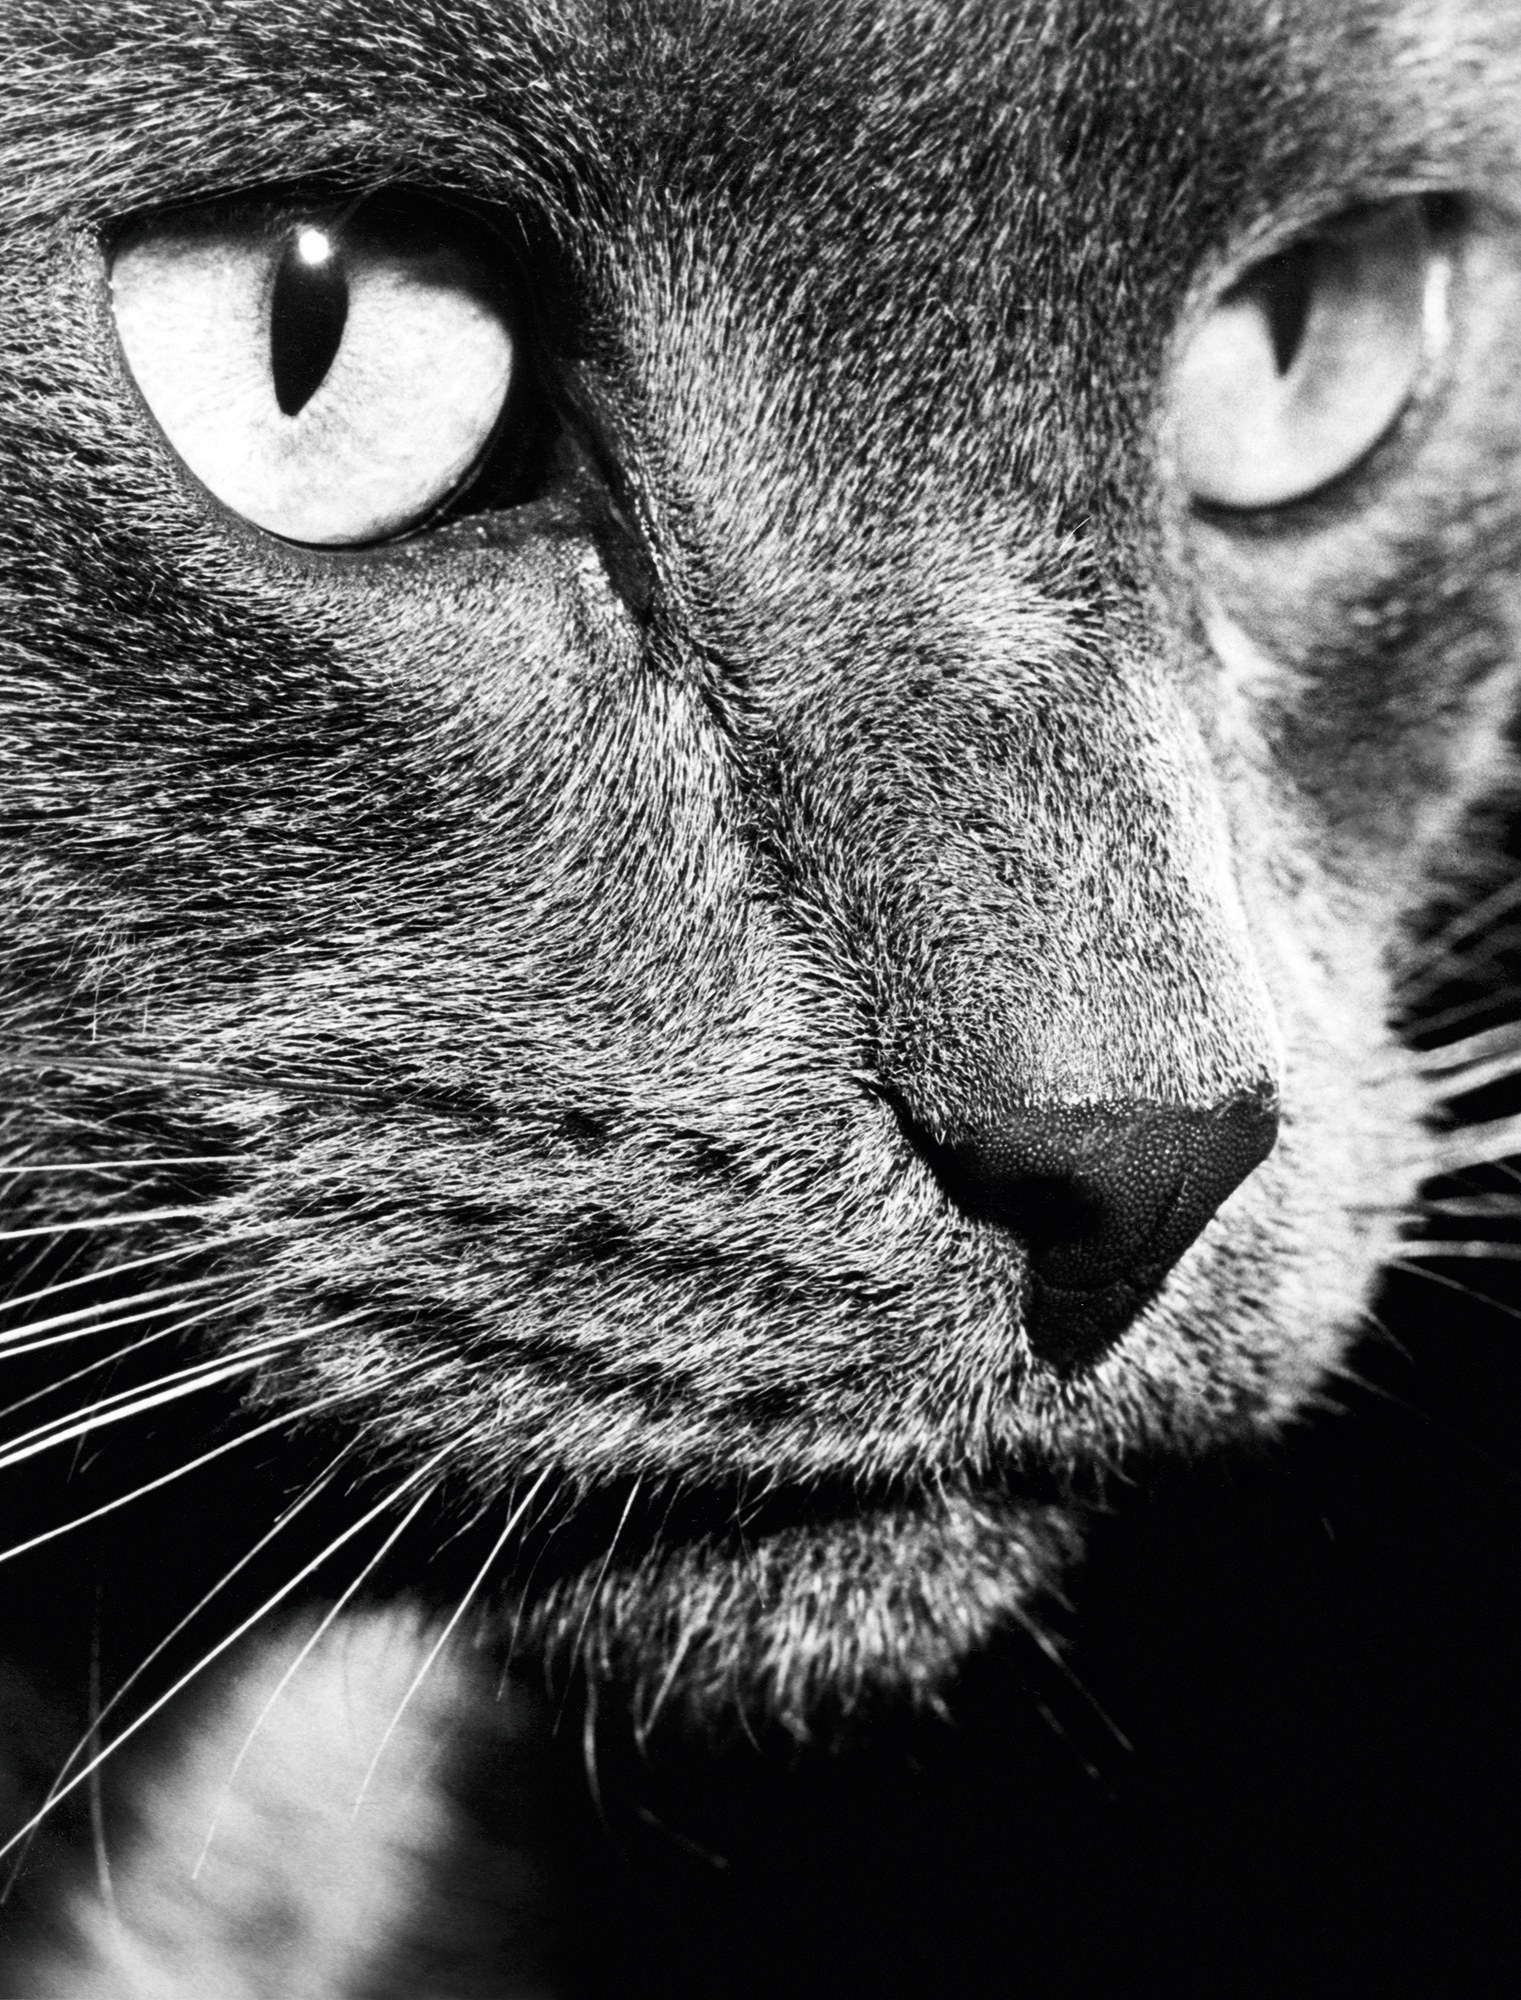 walter chandoha cat photography inspiration